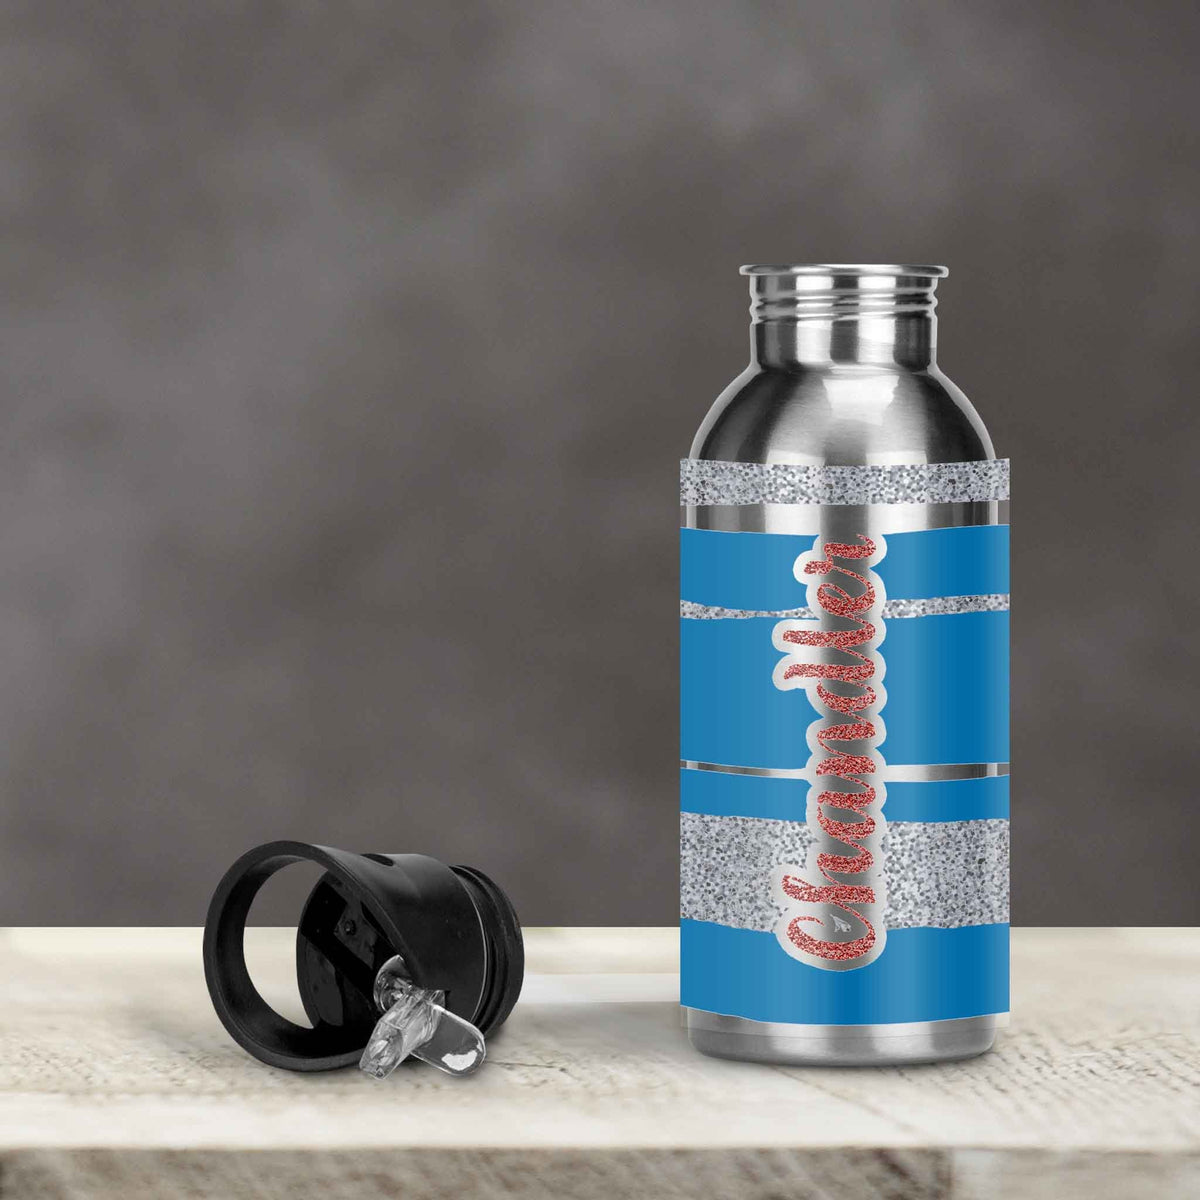 Personalized Water Bottles | Custom Stainless Steel Water Bottles | 30 oz | Ole Miss Glitter